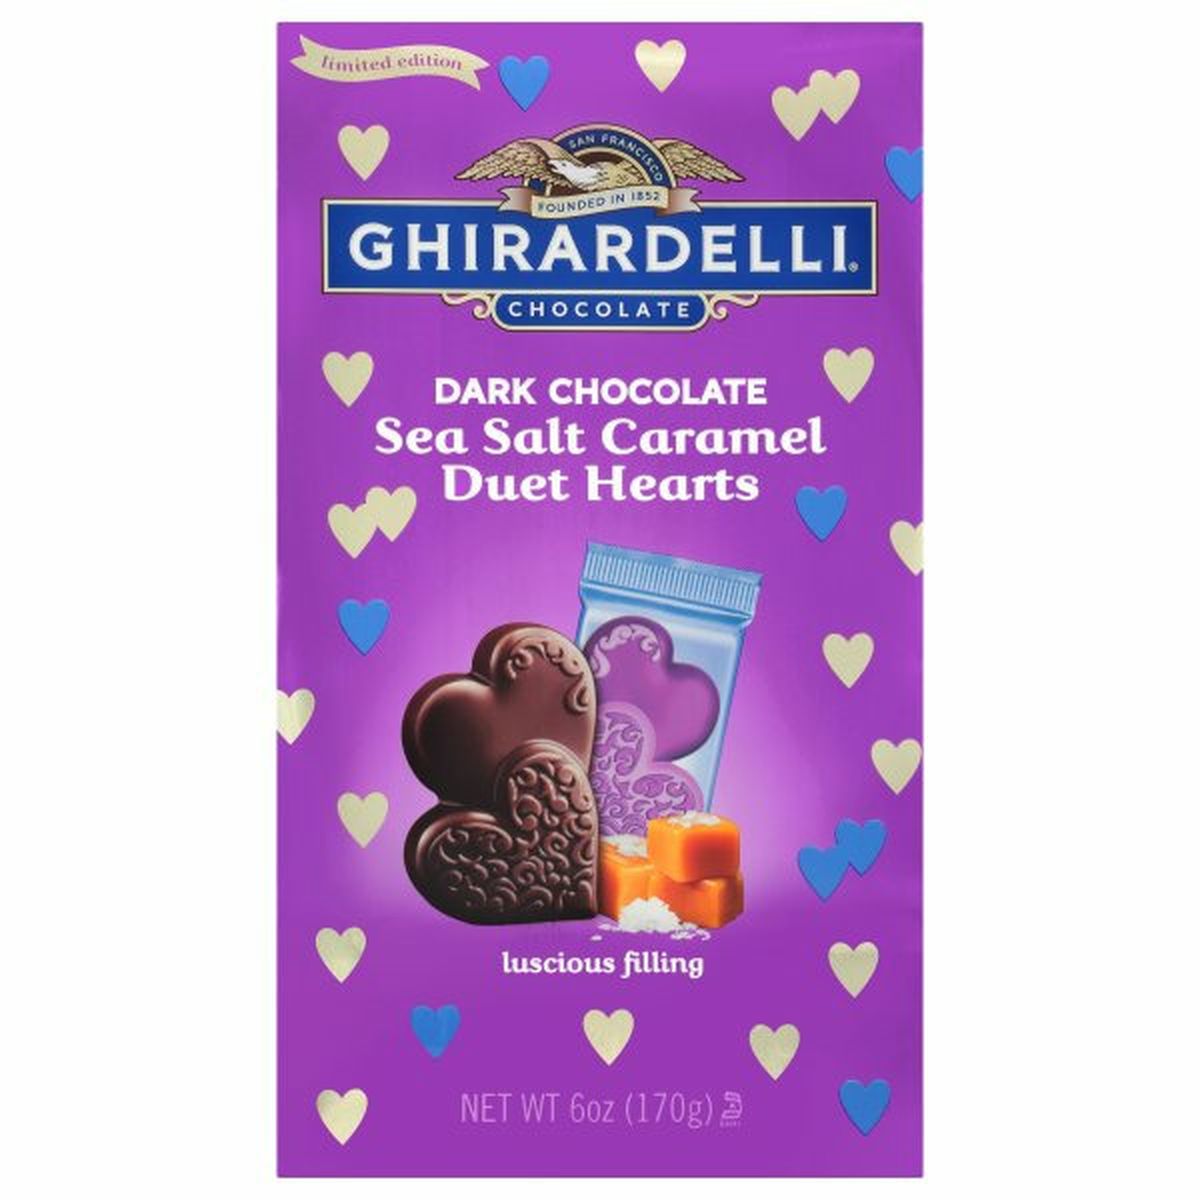 Calories in Ghirardelli Dark Chocolate, Sea Salt Caramel, Duet Hearts